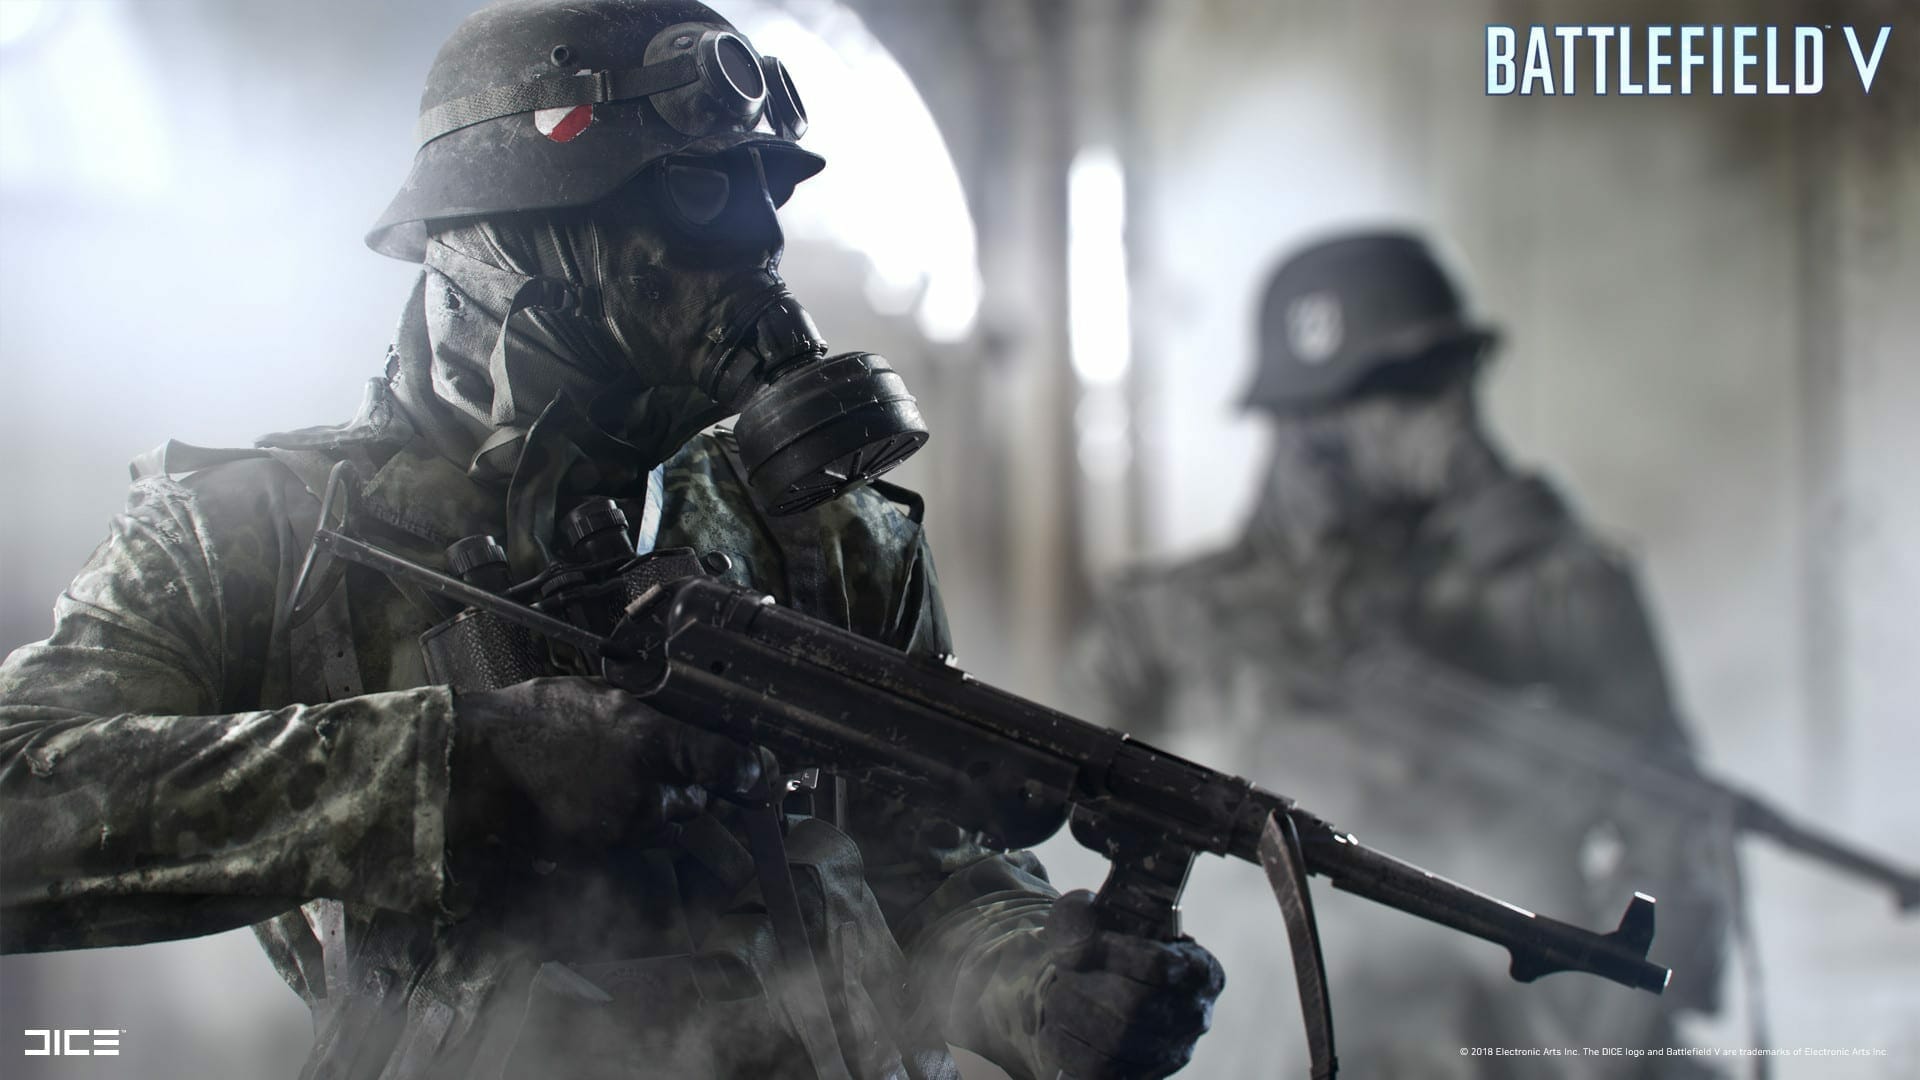 Battlefield 5 update 1.16